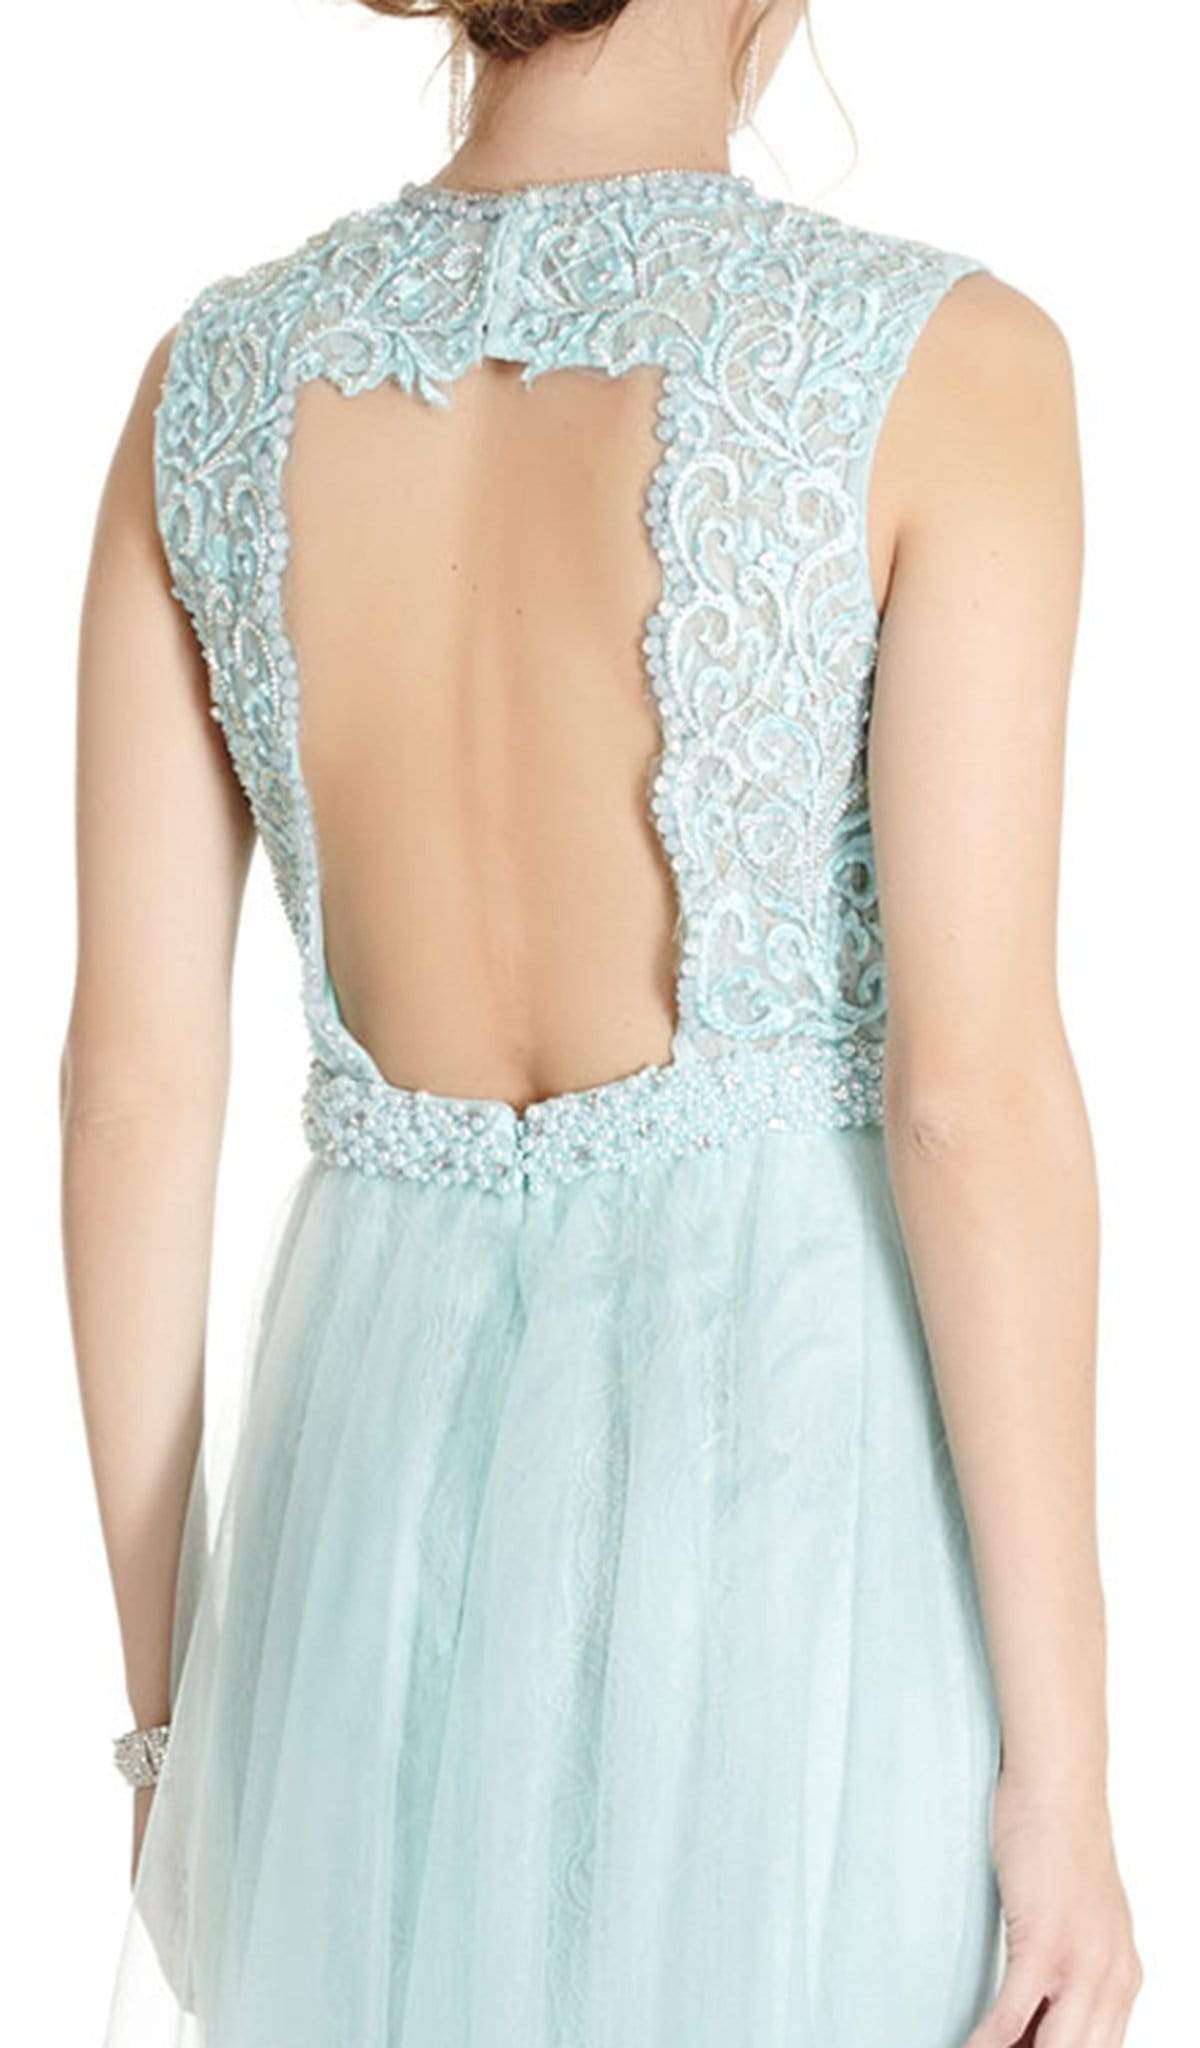 Embroidered Jewel Neck A-line Prom Dress Prom Dresses